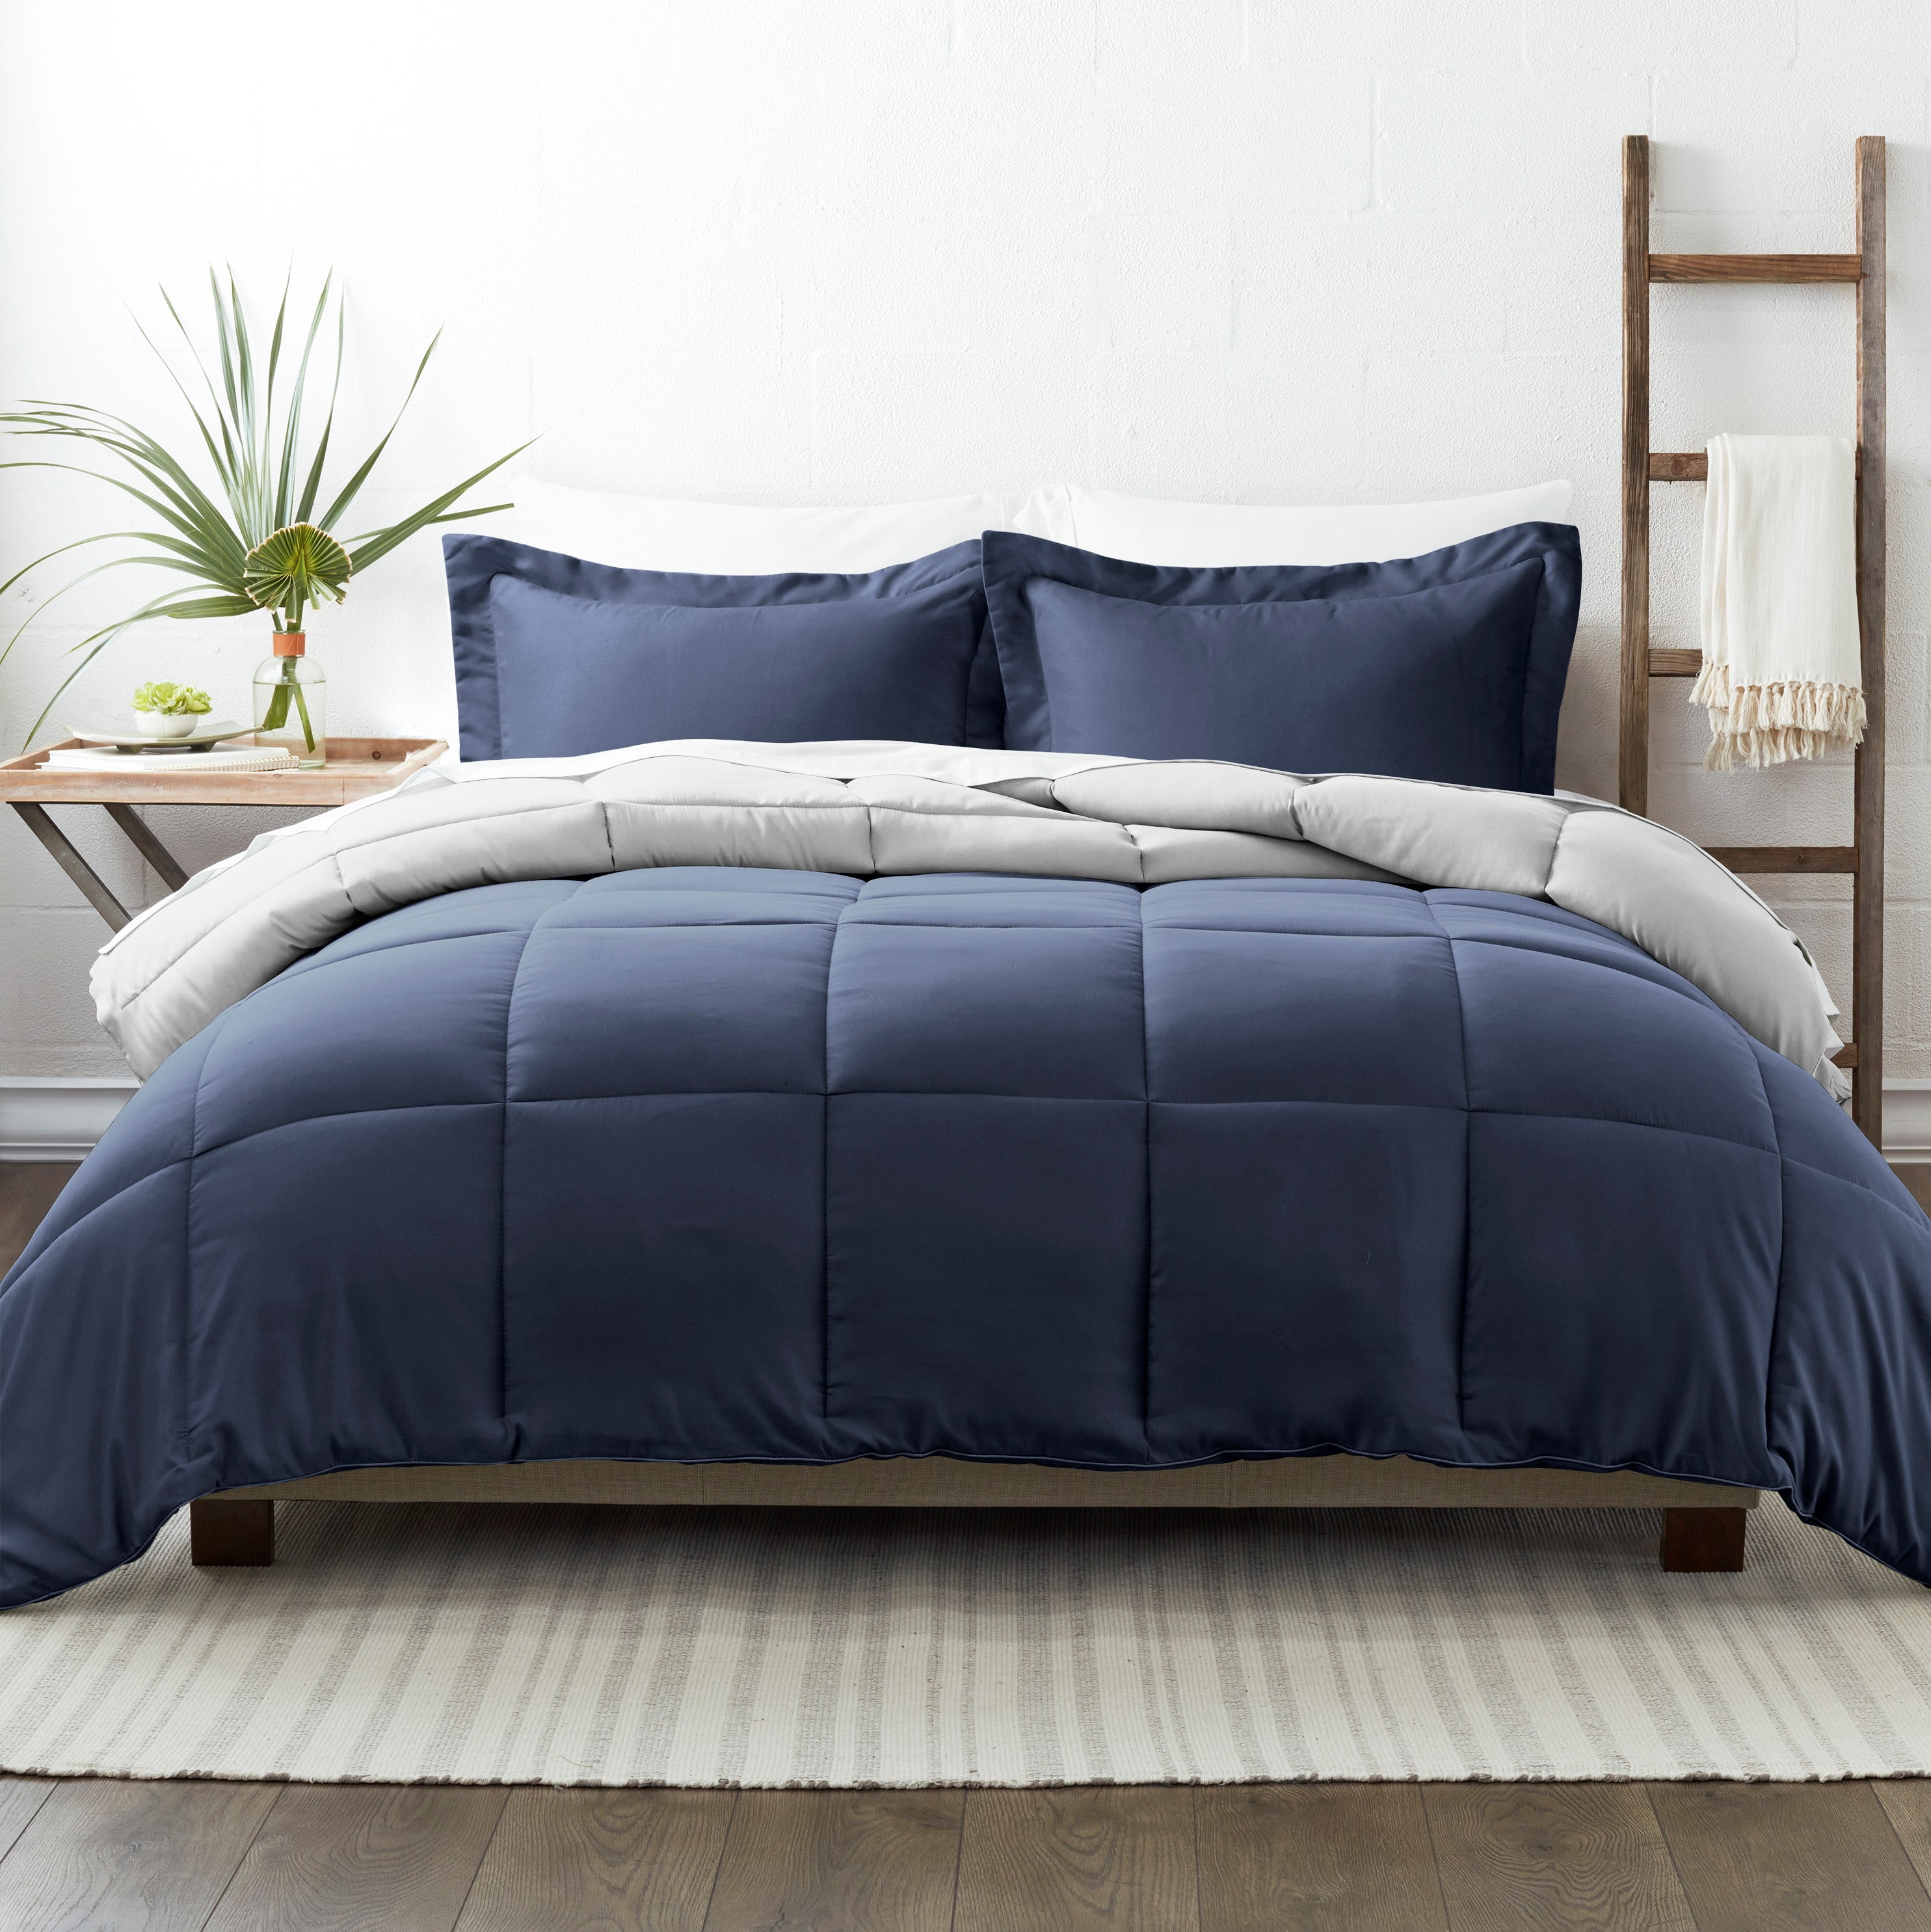 Fancy Linen Down Alternative Comforter Set Reversible Blue/Charcoal All Sizes 